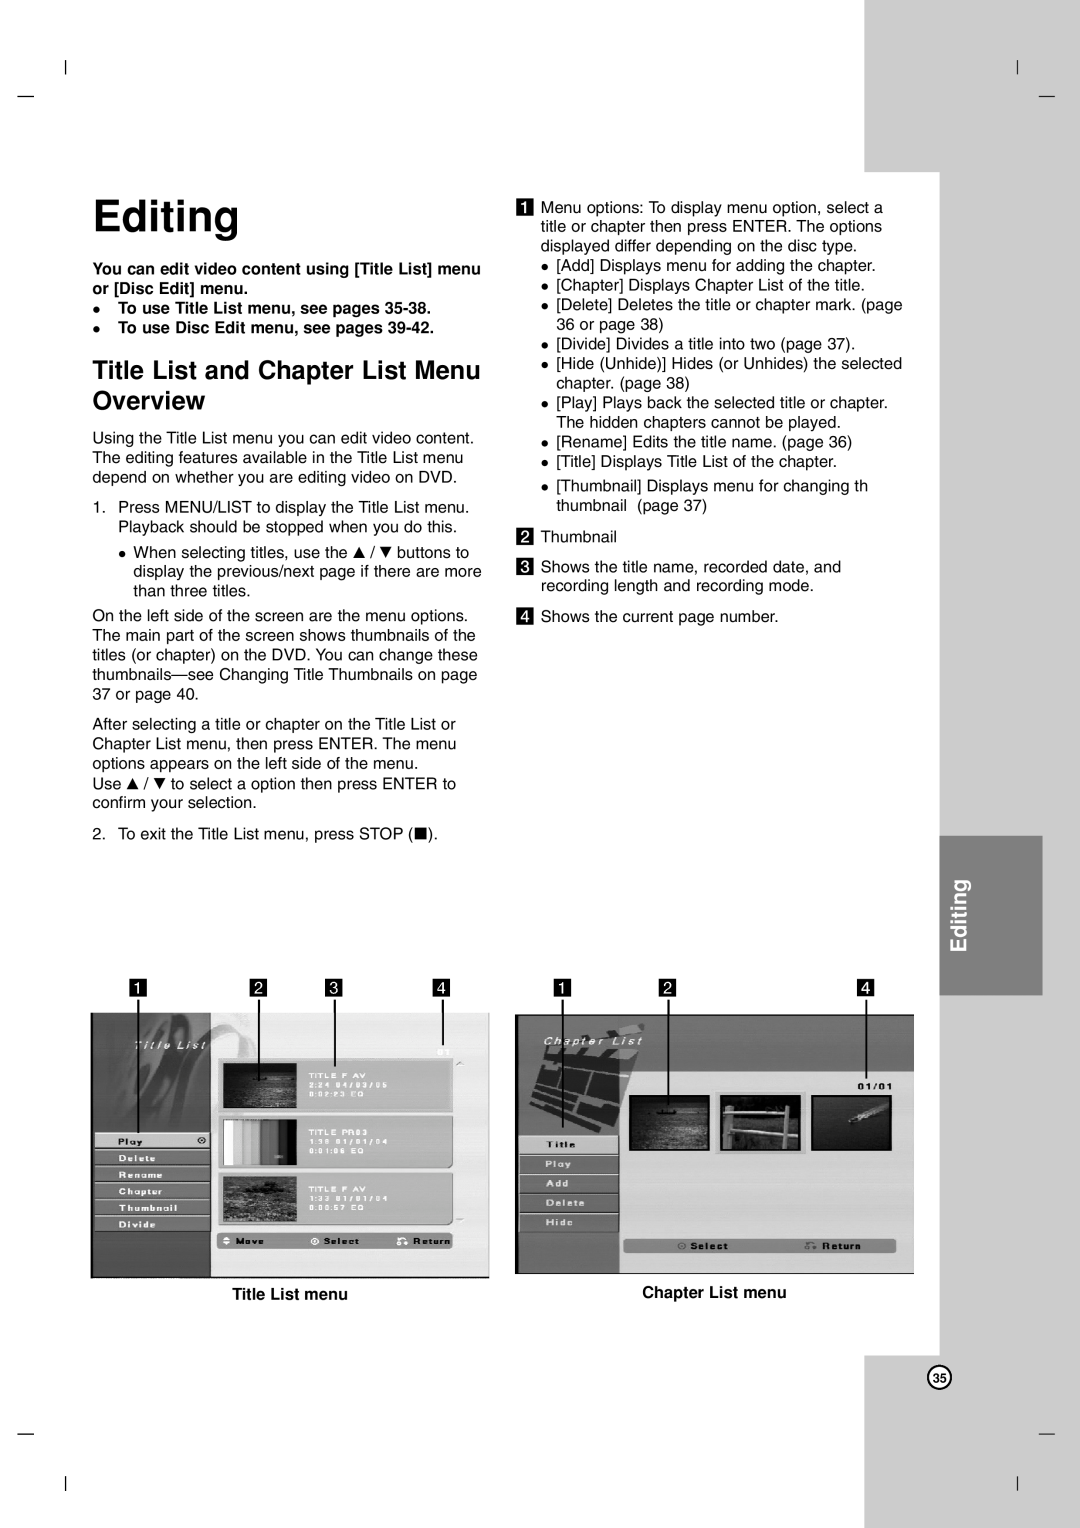 LG Electronics DR7400 Editing, Title List and Chapter List Menu Overview, a b c d, Title List menu, Chapter List menu 